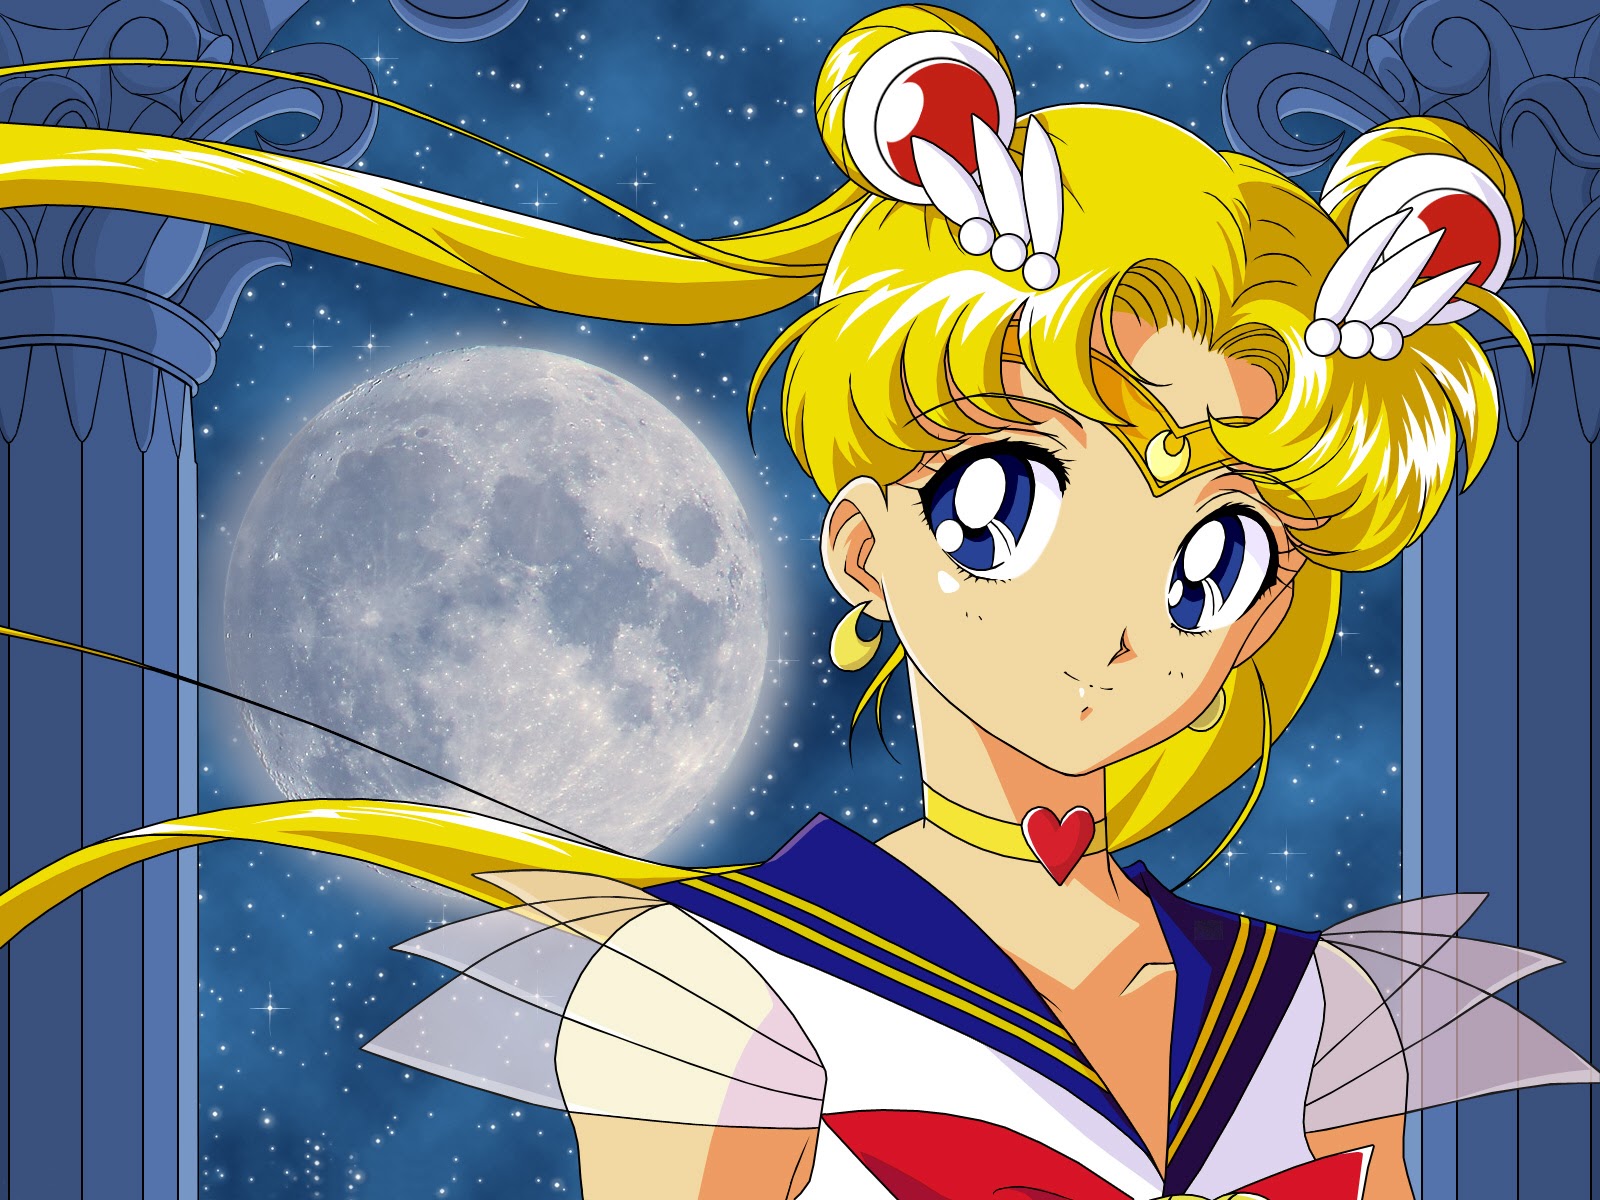 4. "Usagi Tsukino" from Sailor Moon - wide 10